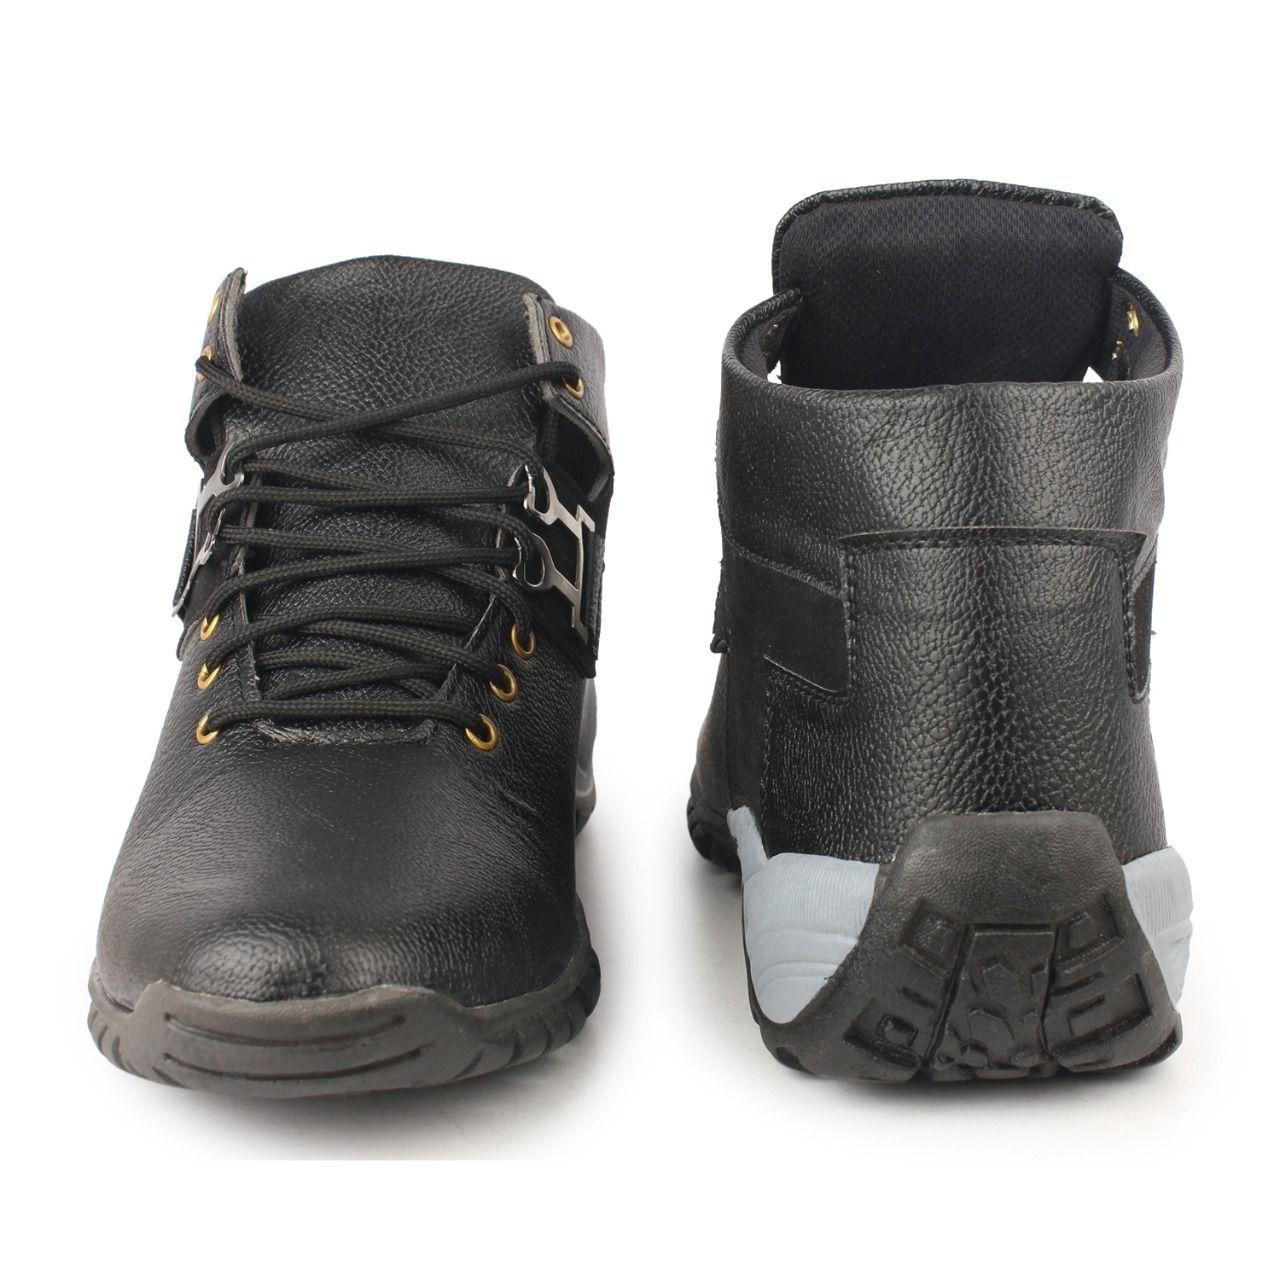 Monex New Latest Black Shoes For Mens